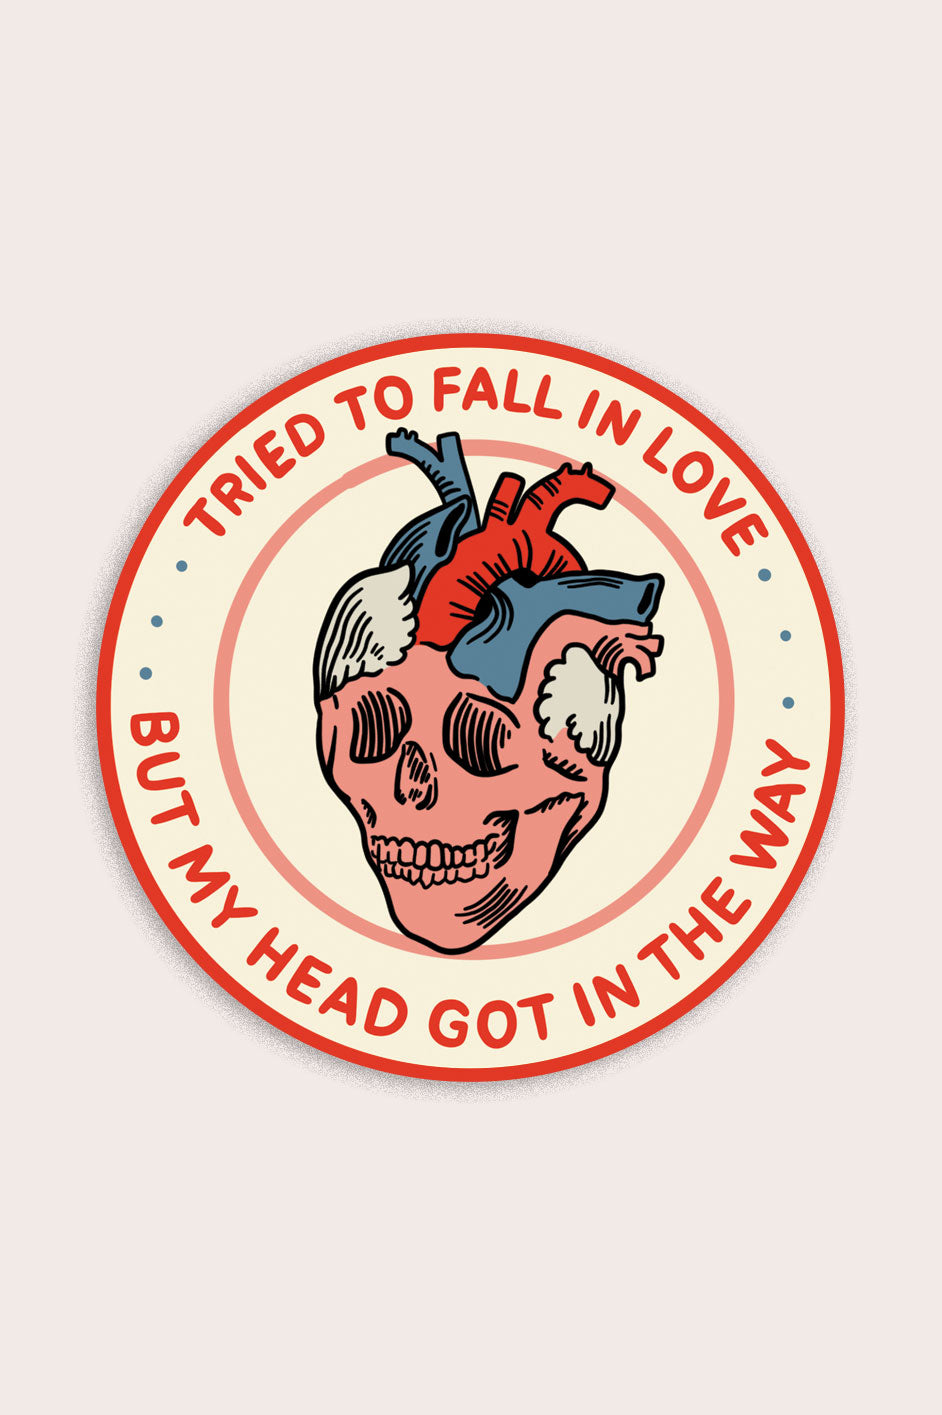 Tried to Fall in Love Vinyl Sticker